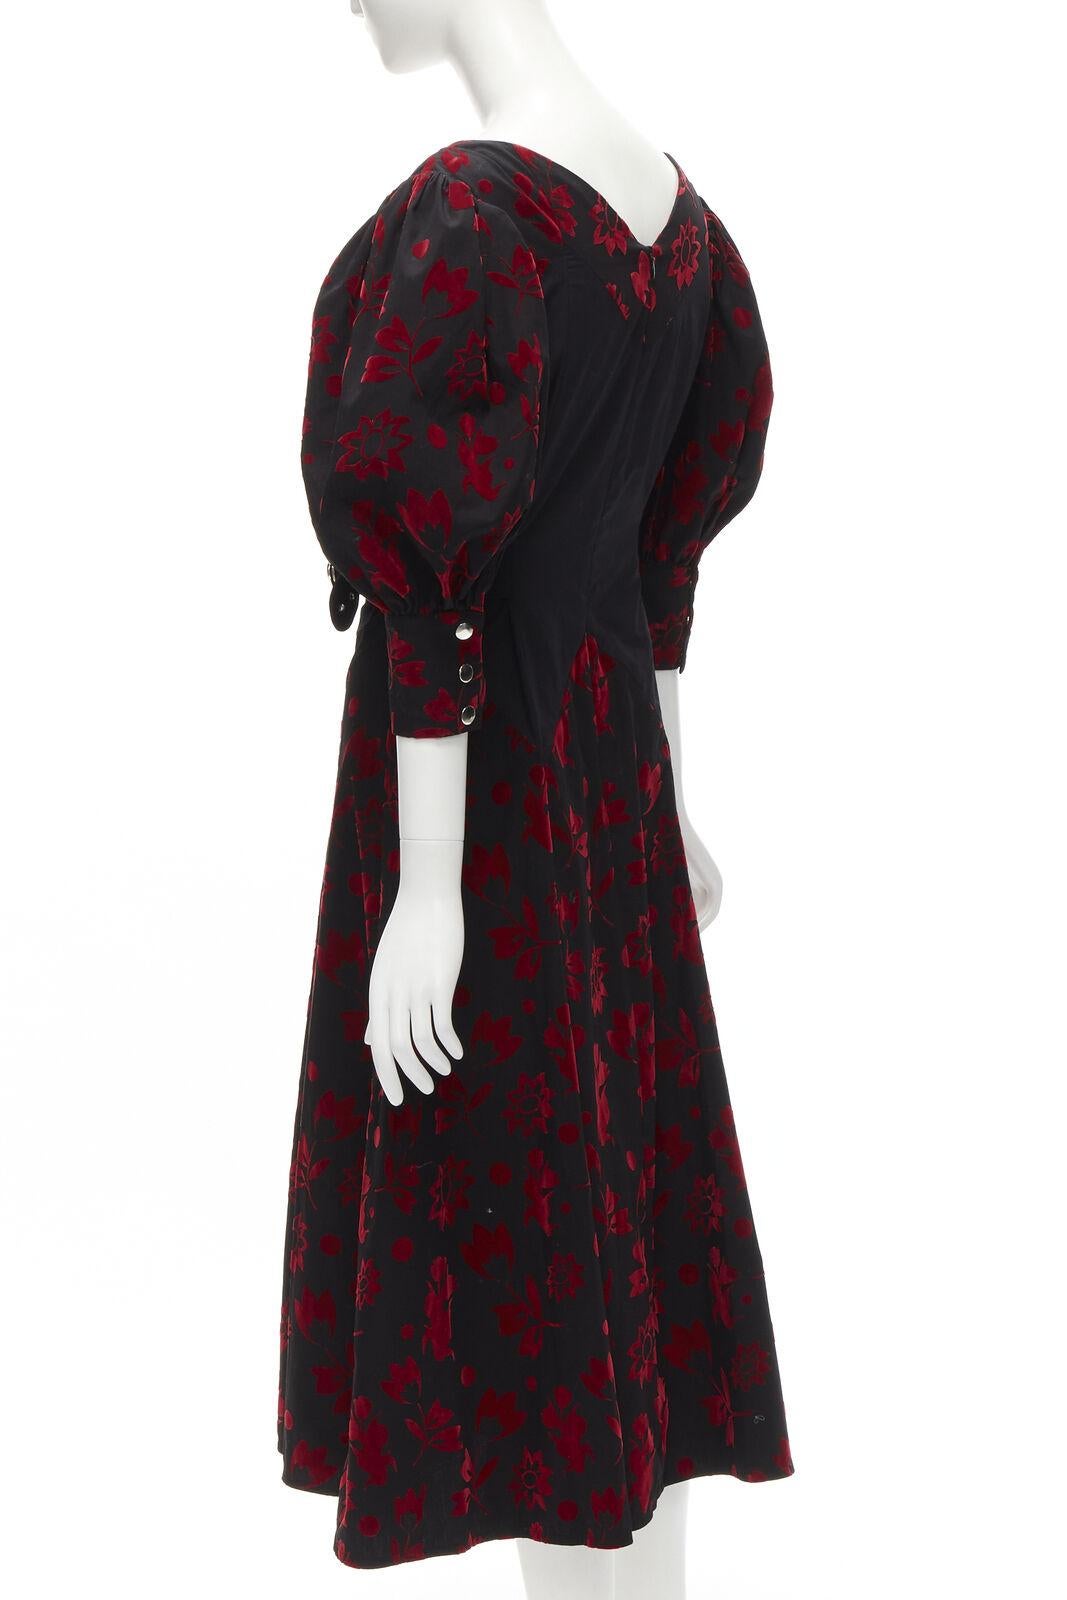 CHOPOVA LOWENA red velvet floral butterfly hook black corset Victorian dress S For Sale 1